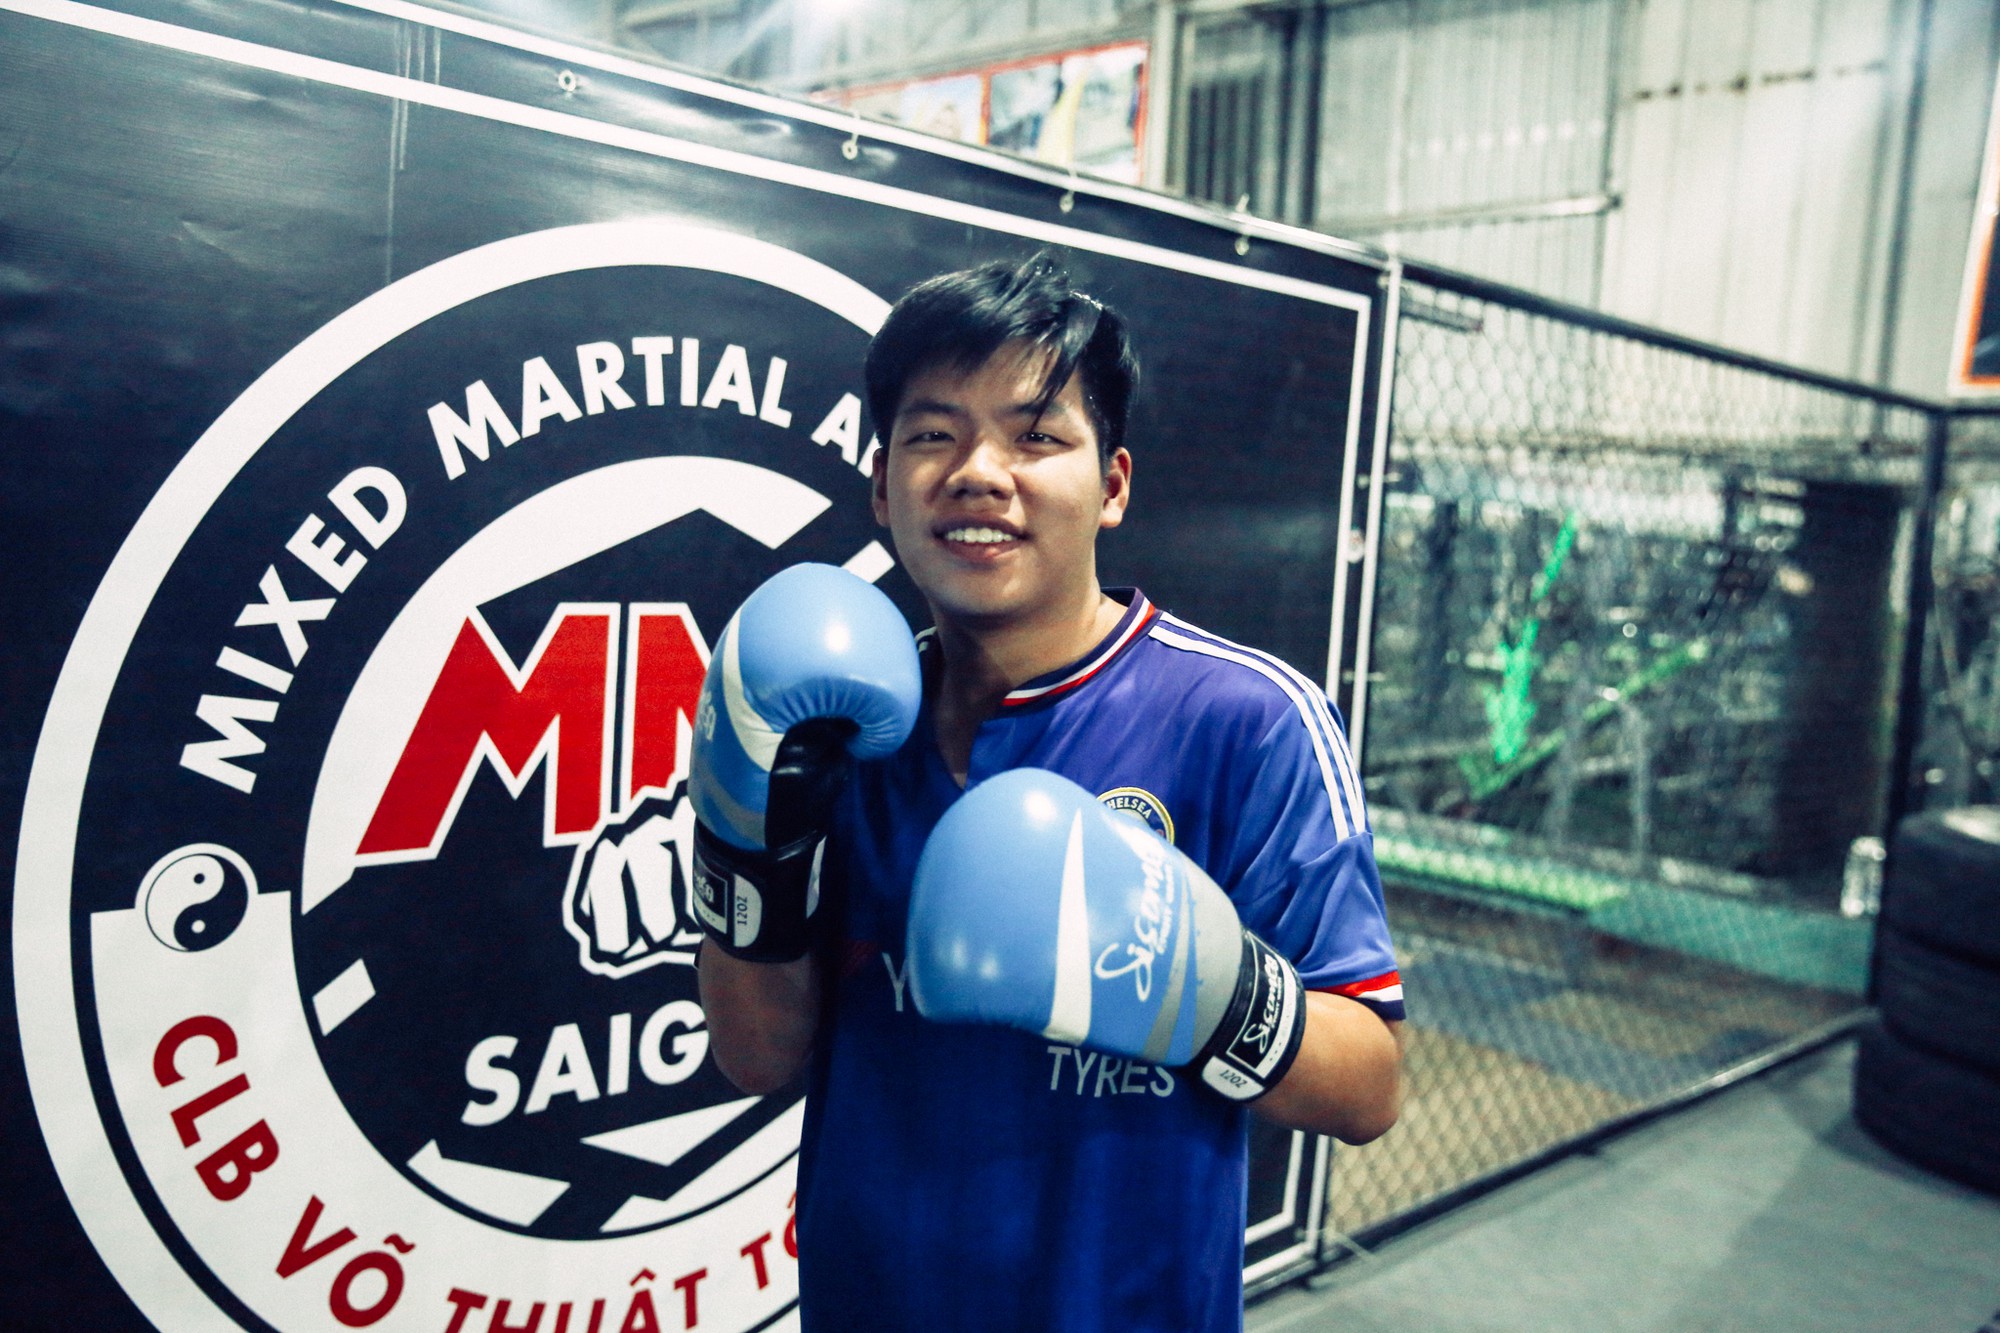 MMA Saigon